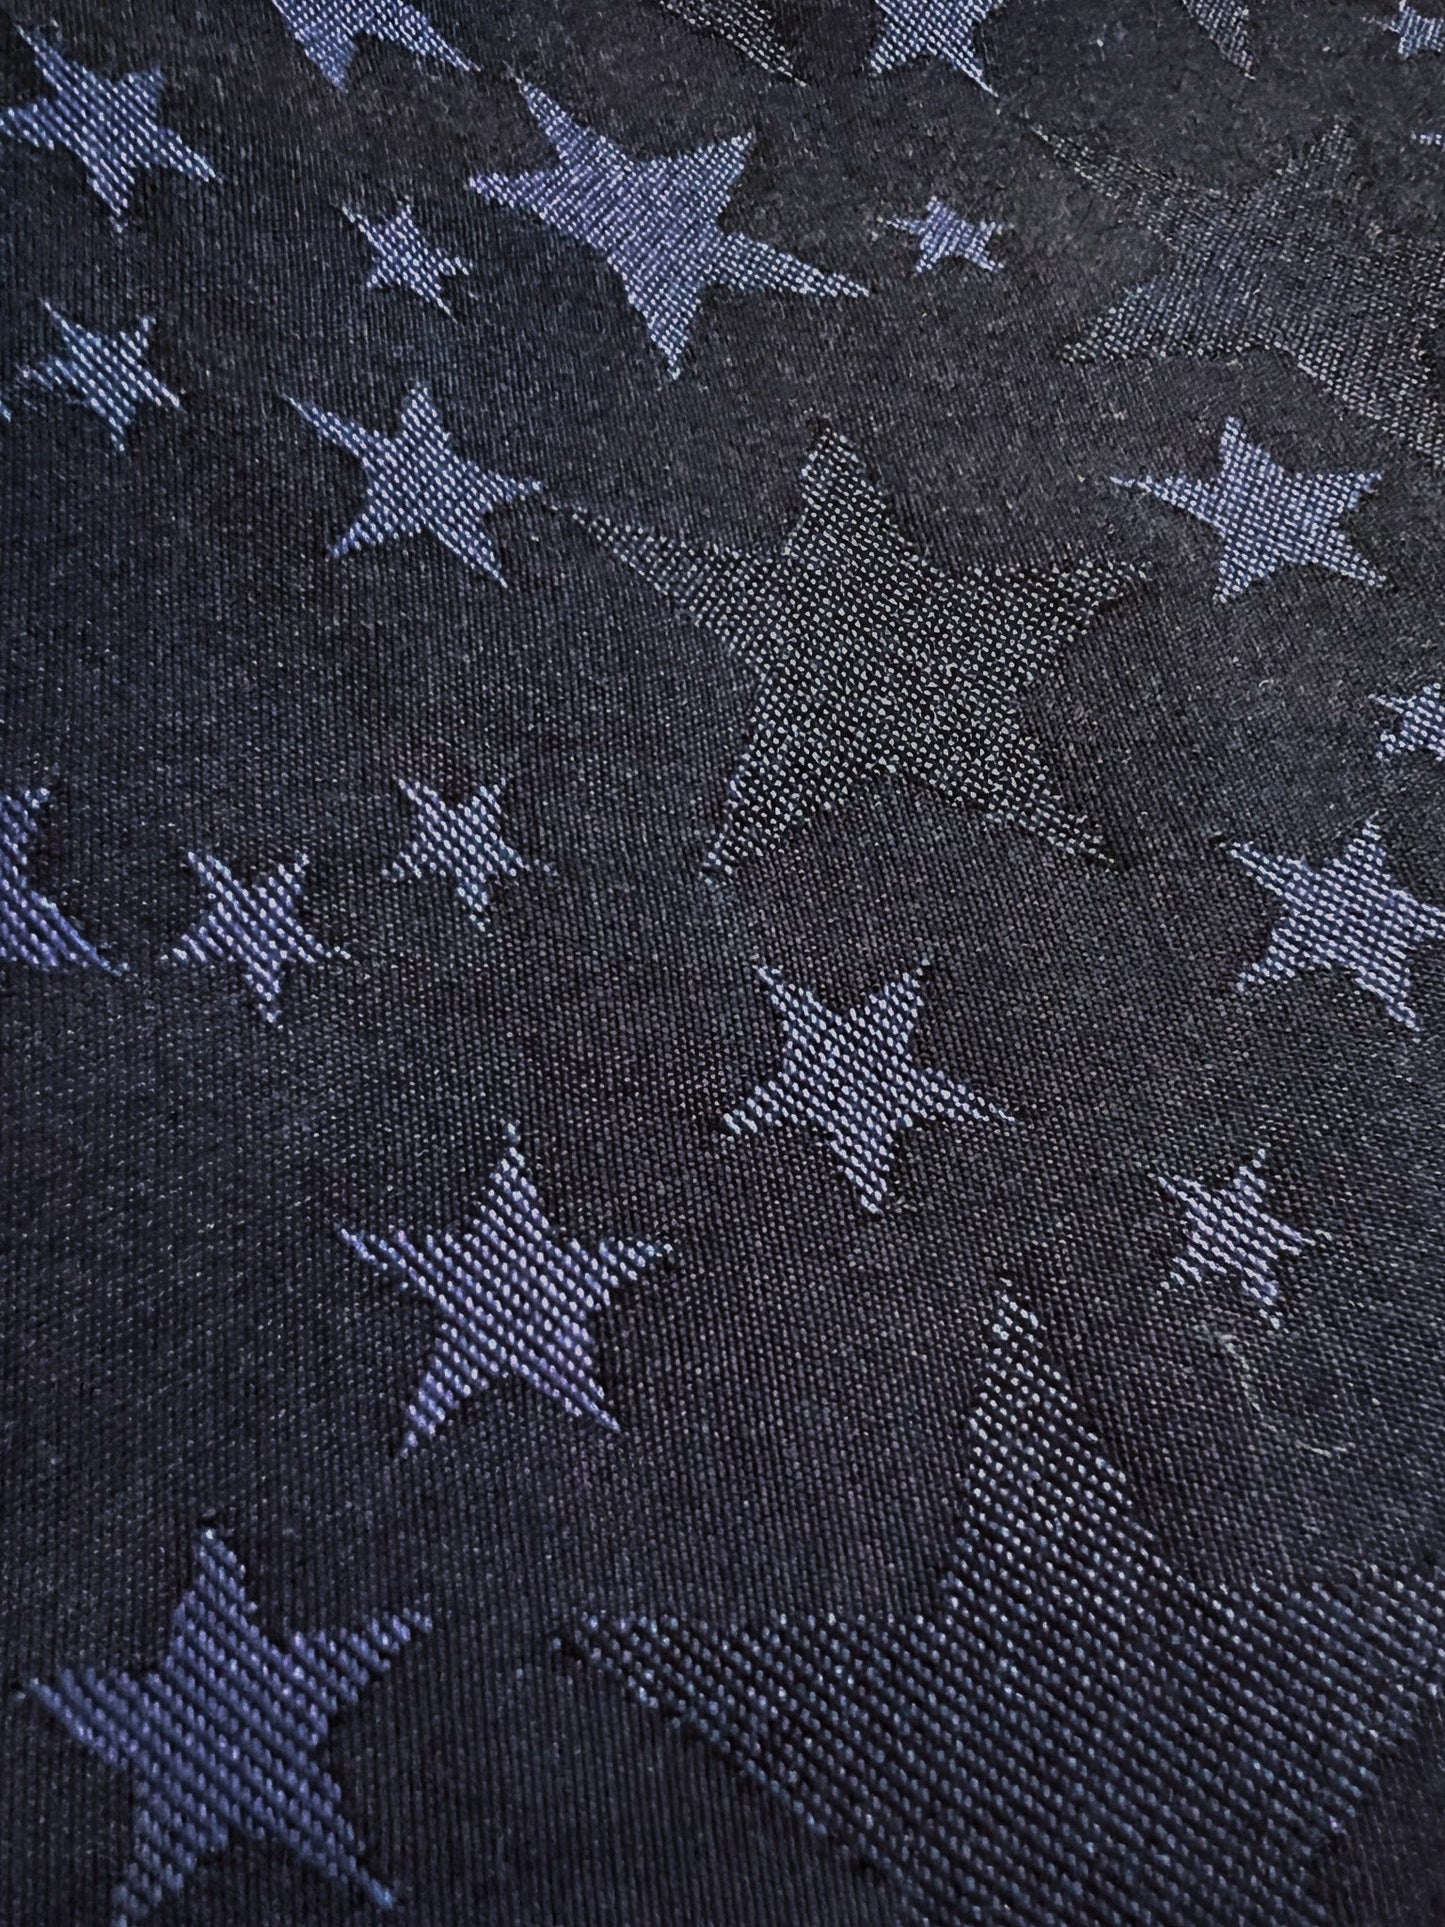 Jackard fine cotton midi skirt with embellished stars